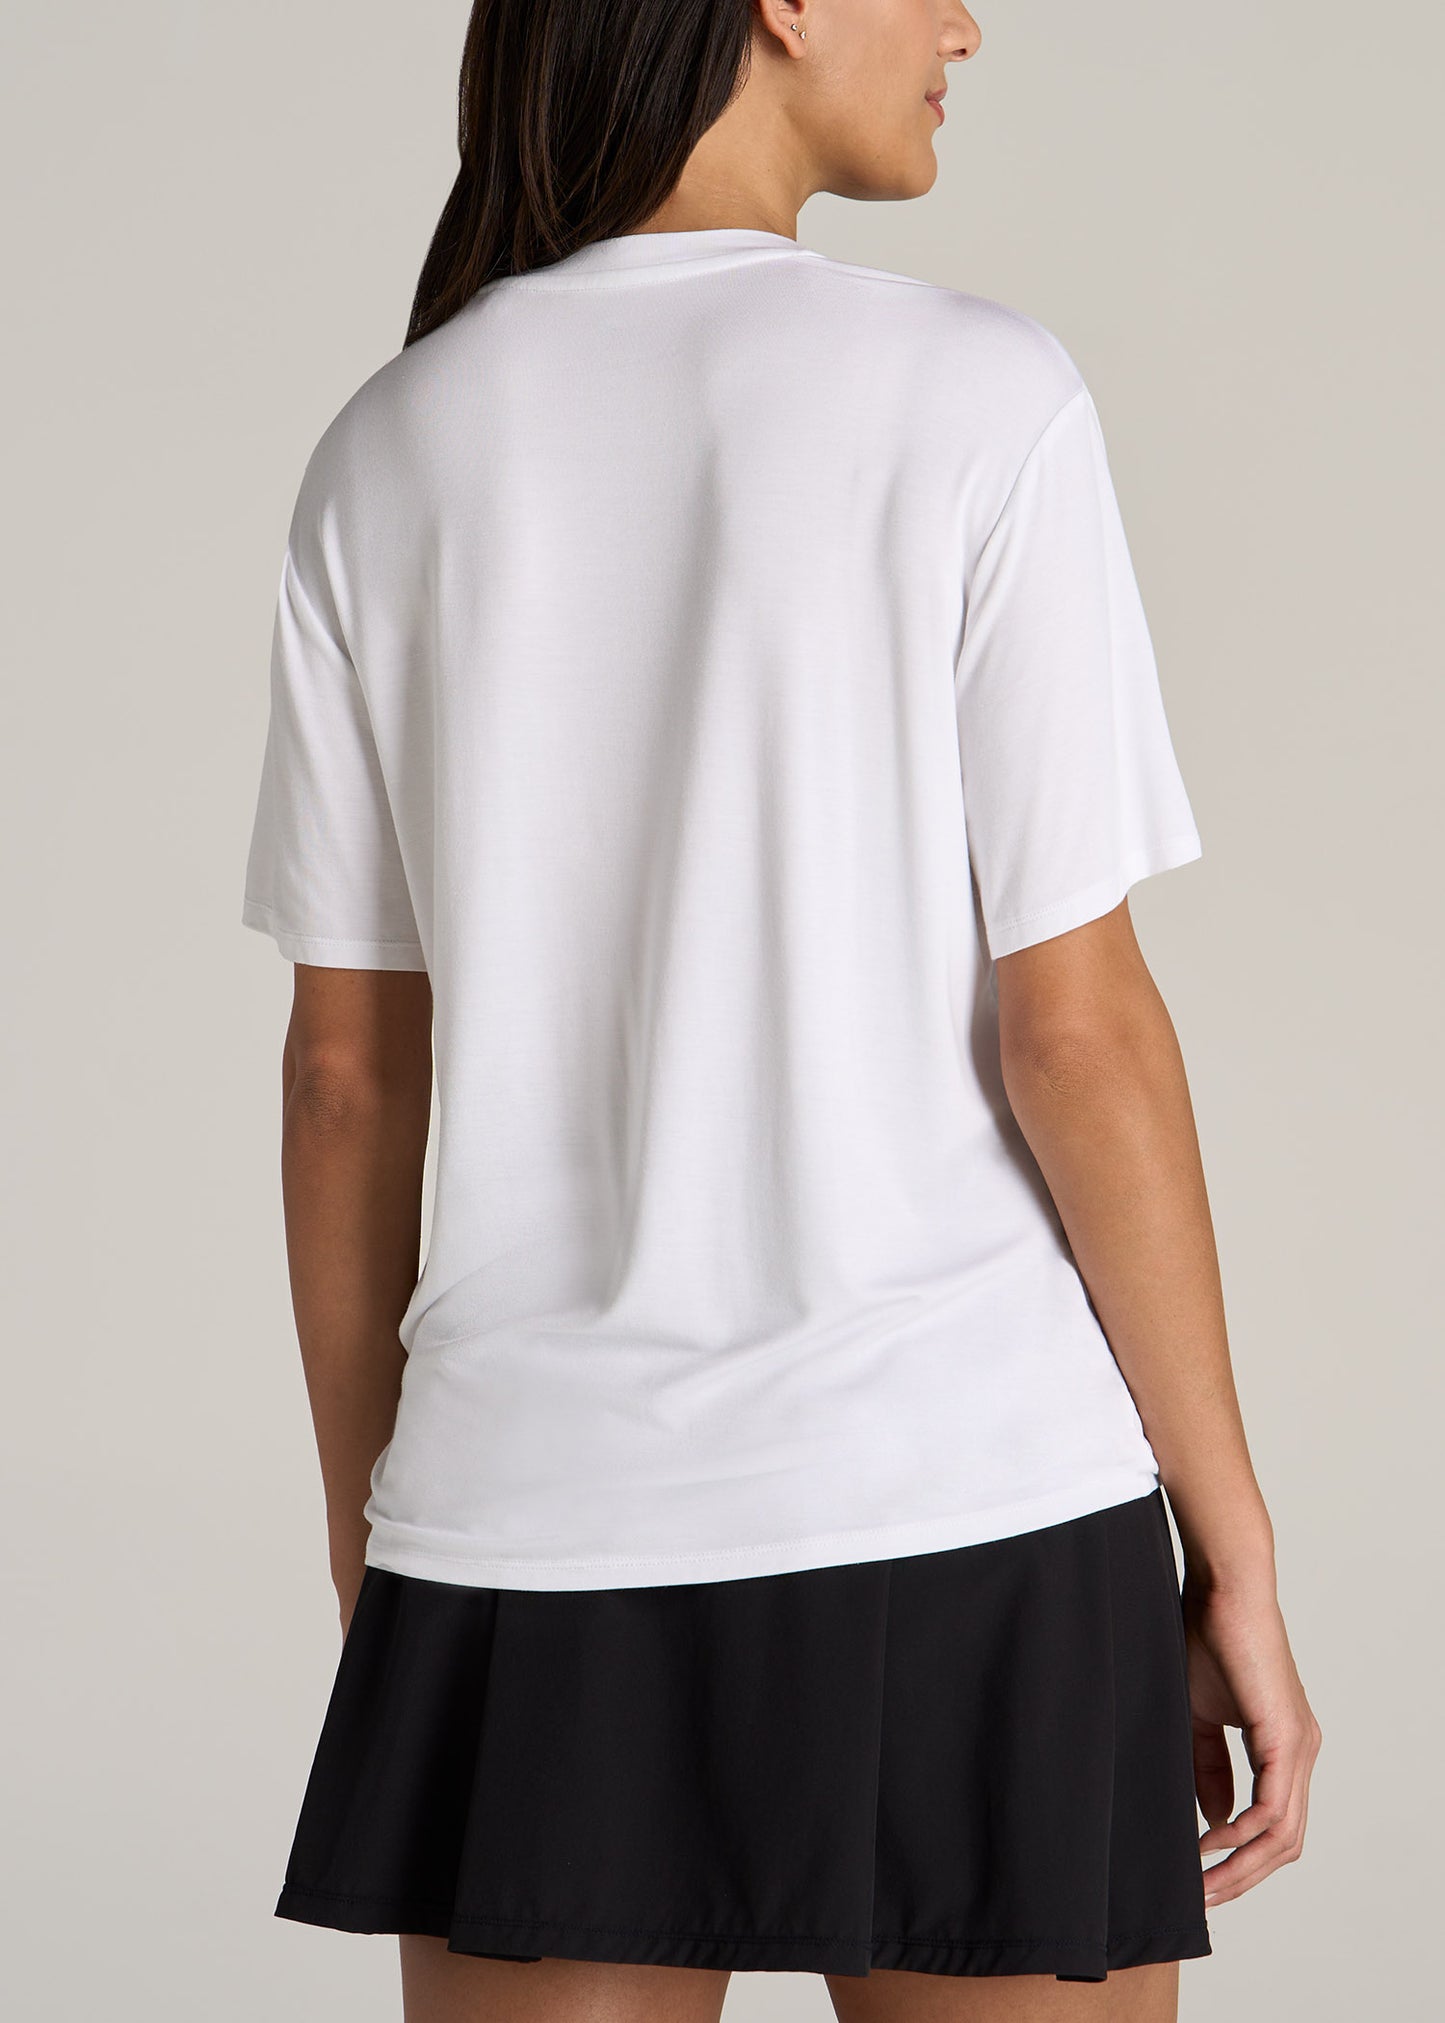 Short-Sleeve Oversized Crewneck Pocket T-Shirt for Tall Women in White